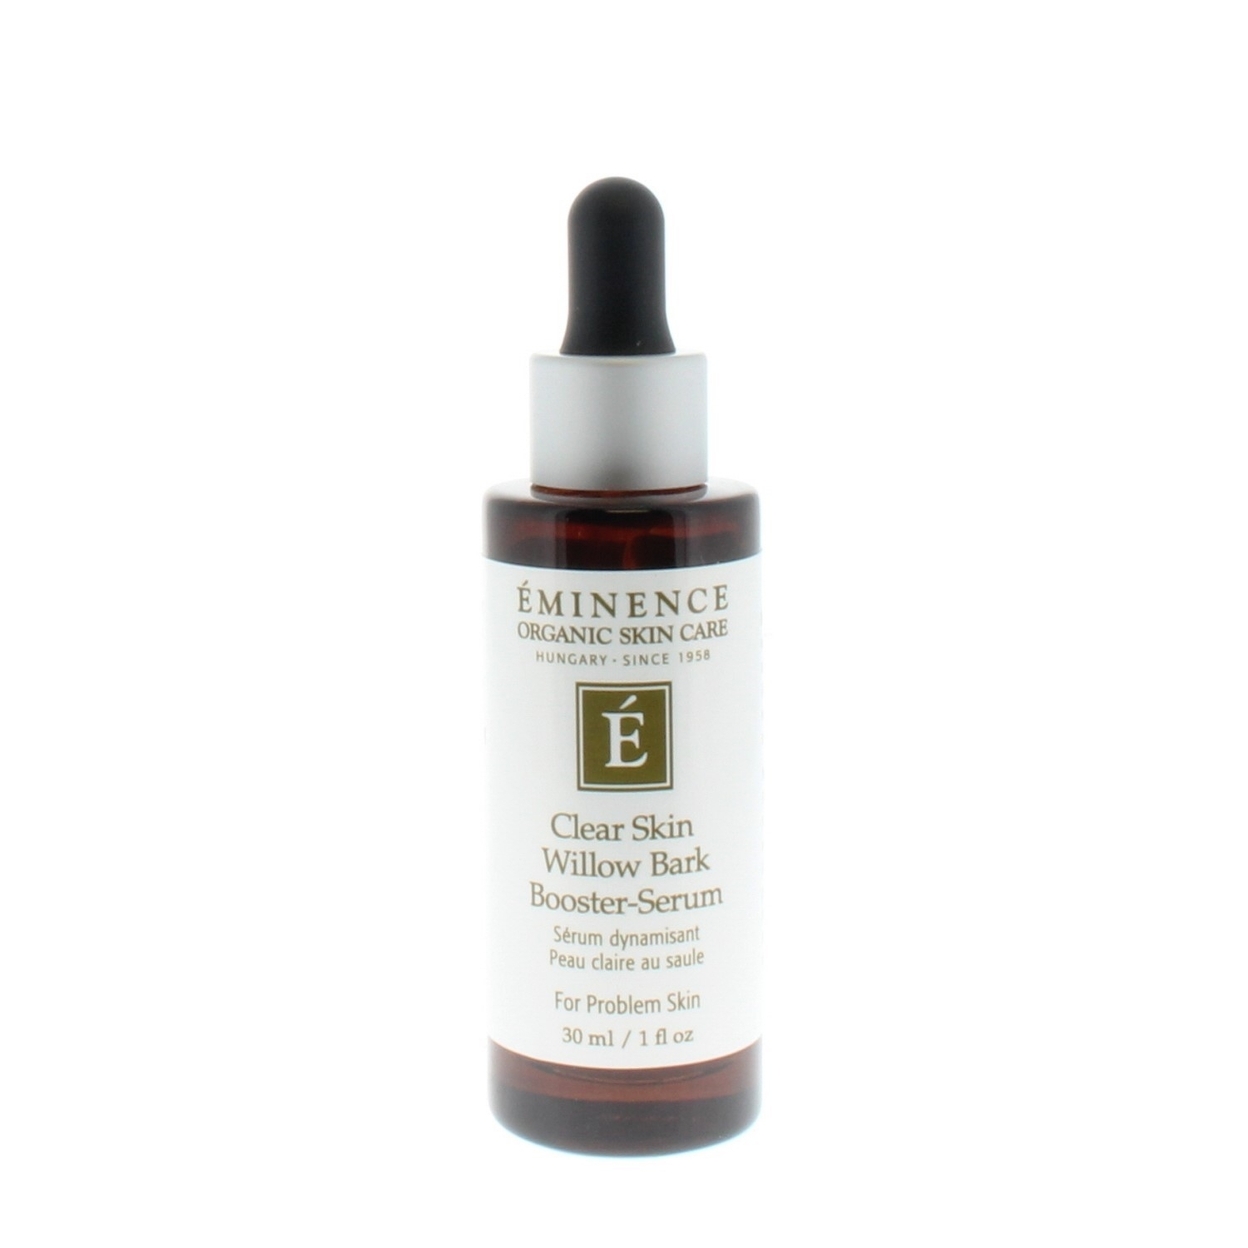 Eminence Clear Skin Willow Bark Booster-Serum 30ml/1oz (No Box)